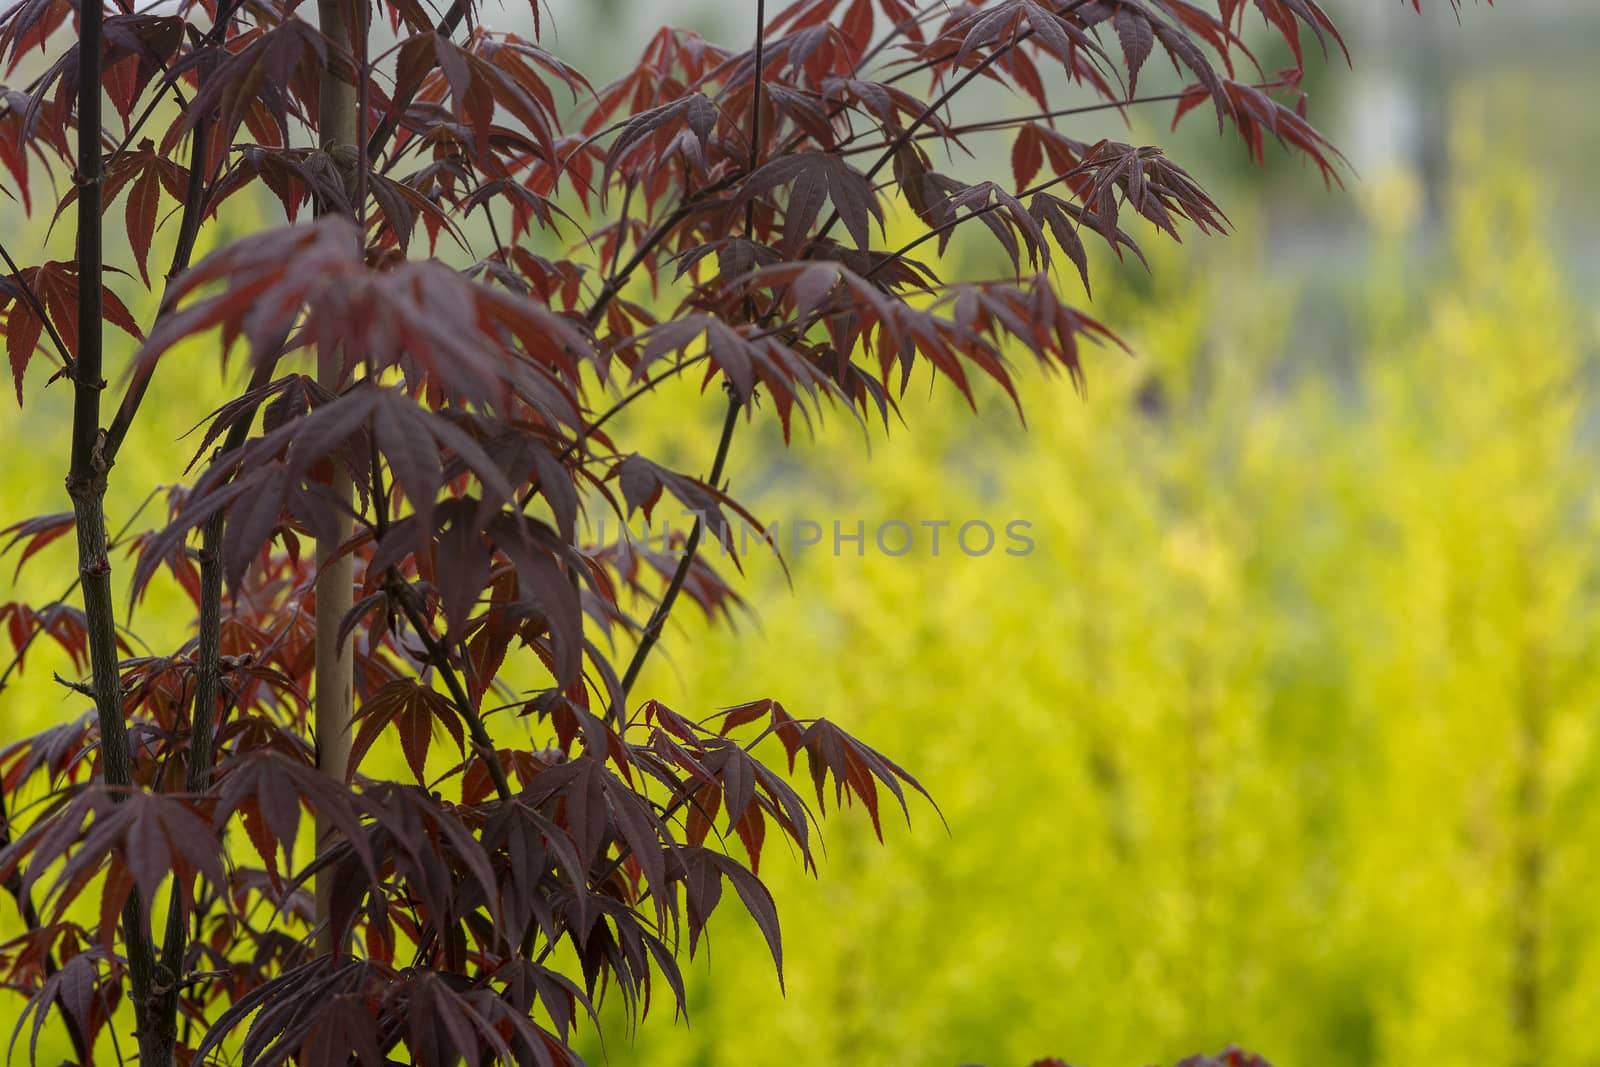 Elegant Japanese zen style bamboo tree background dark red leaves against bright green background